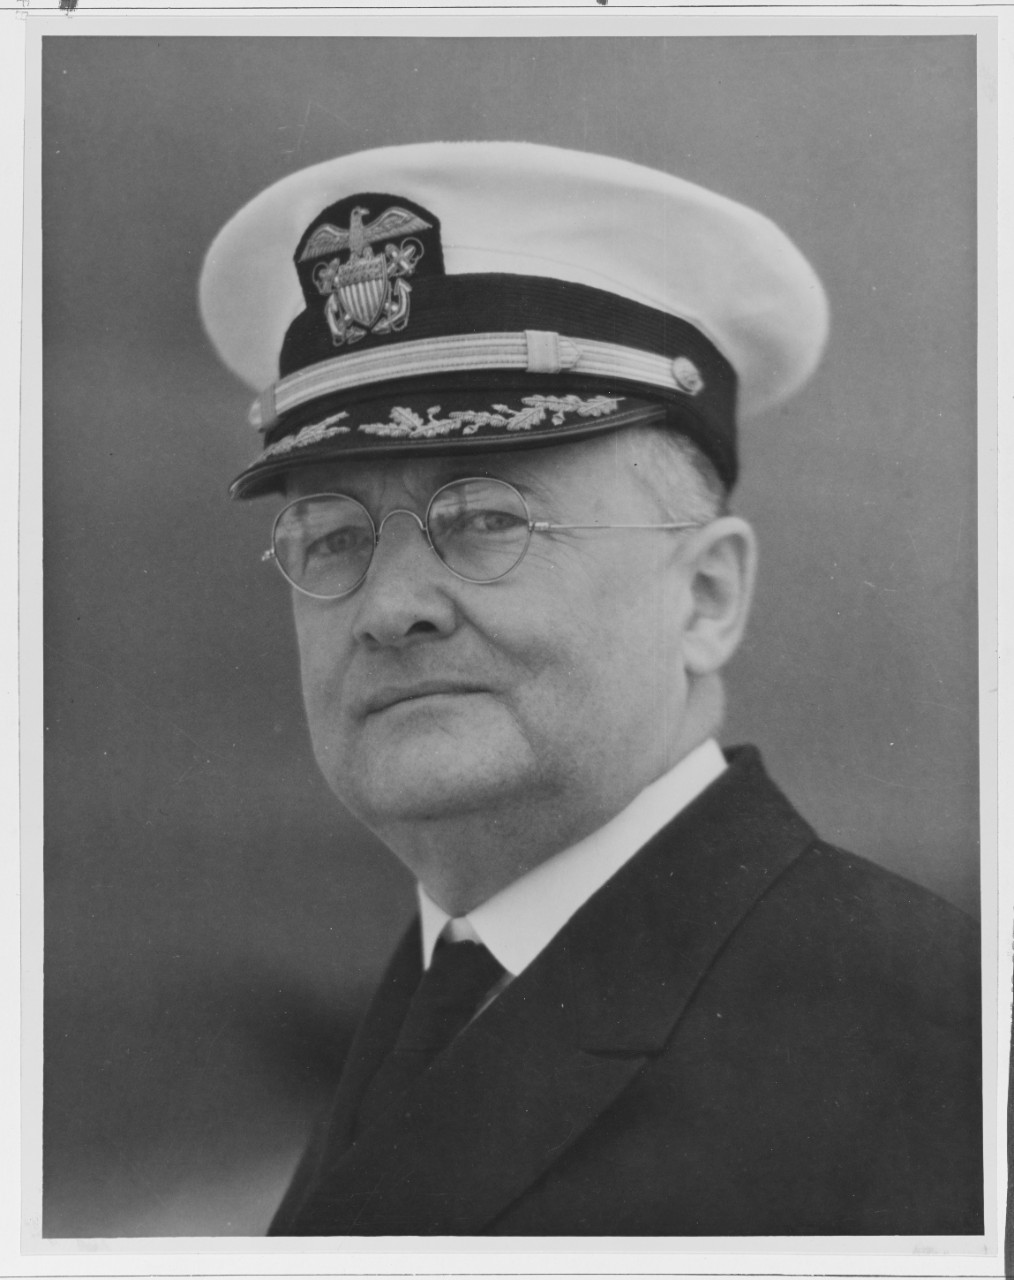 Wright, Nathaniel H. Captain USN.